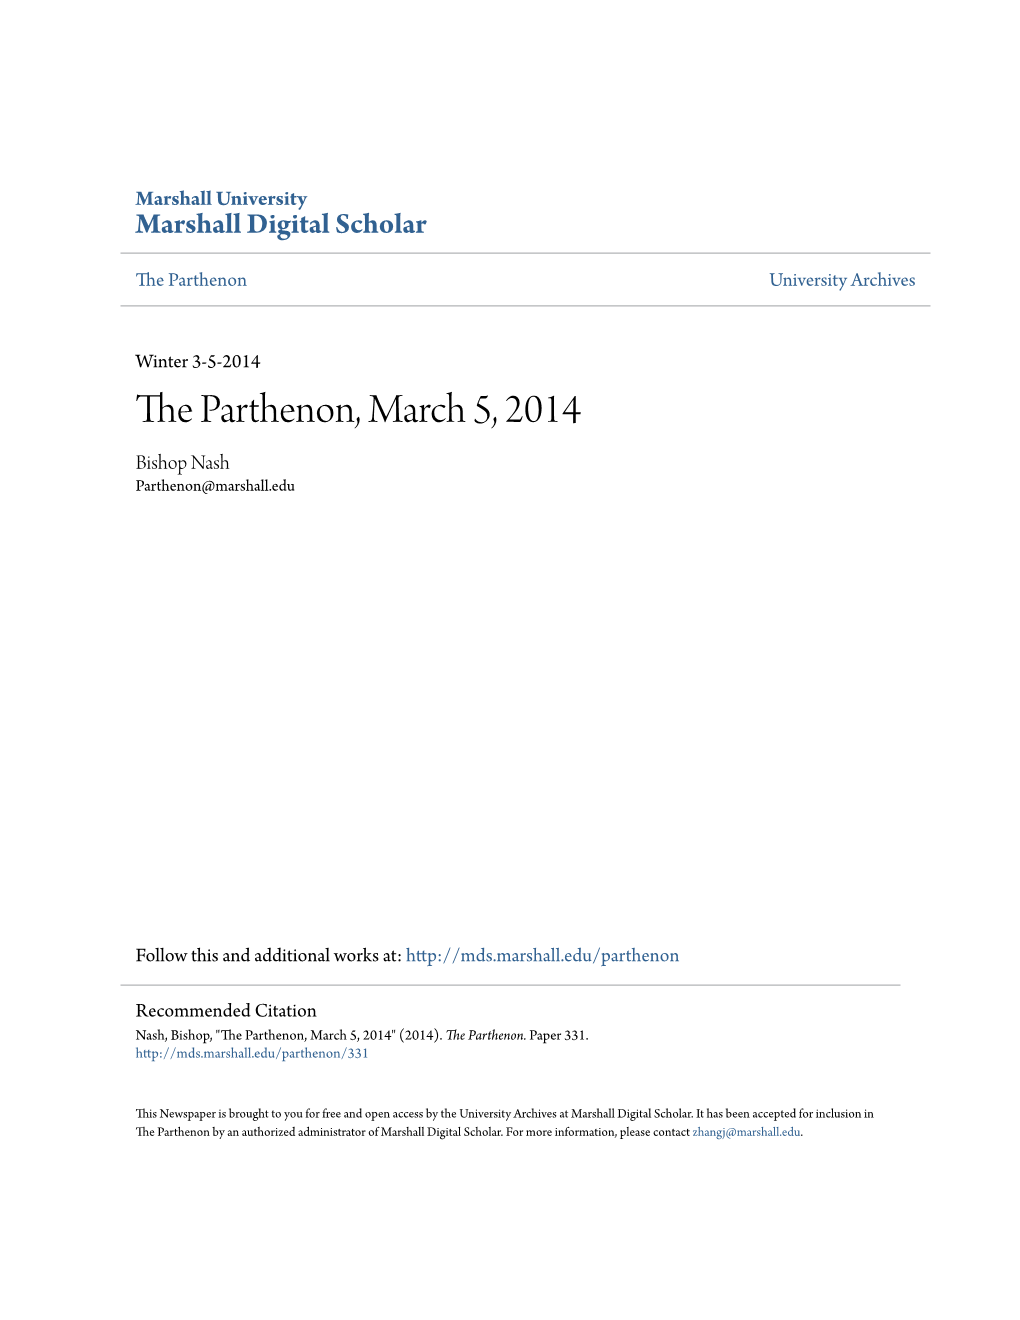 The Parthenon, March 5, 2014